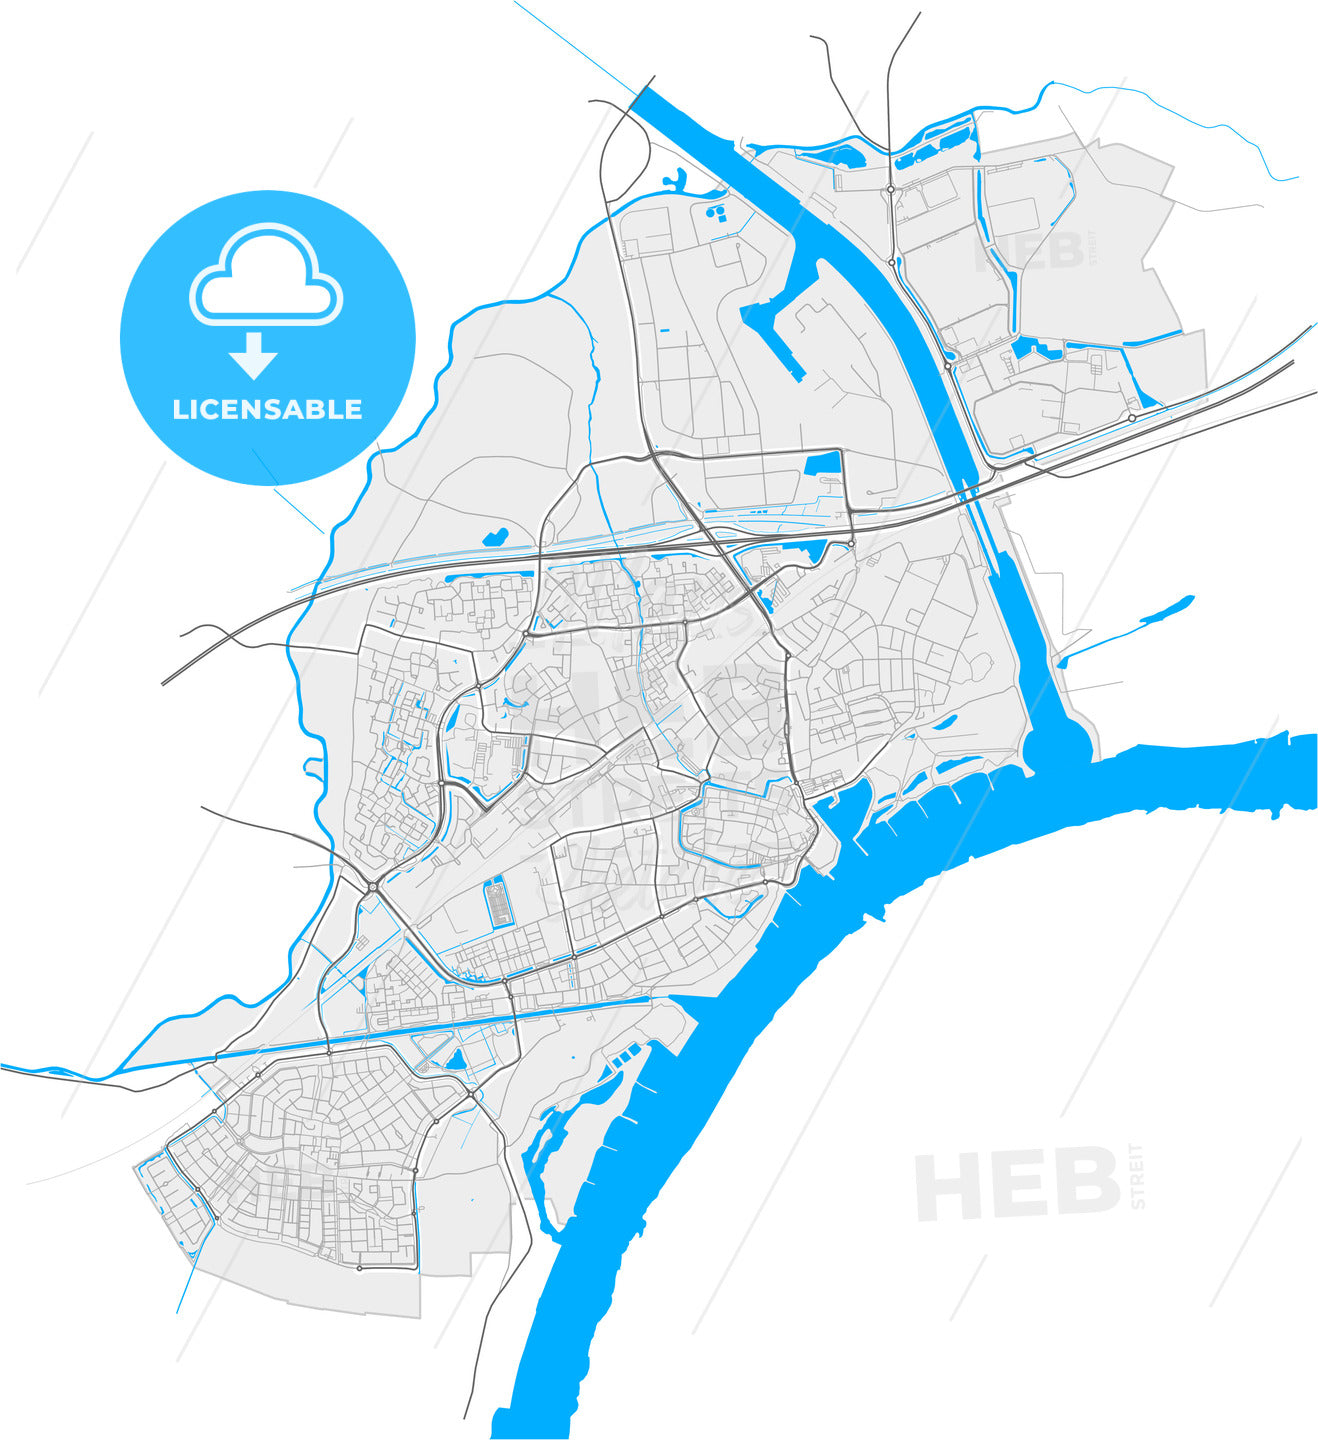 Tiel, Gelderland, Netherlands, high quality vector map